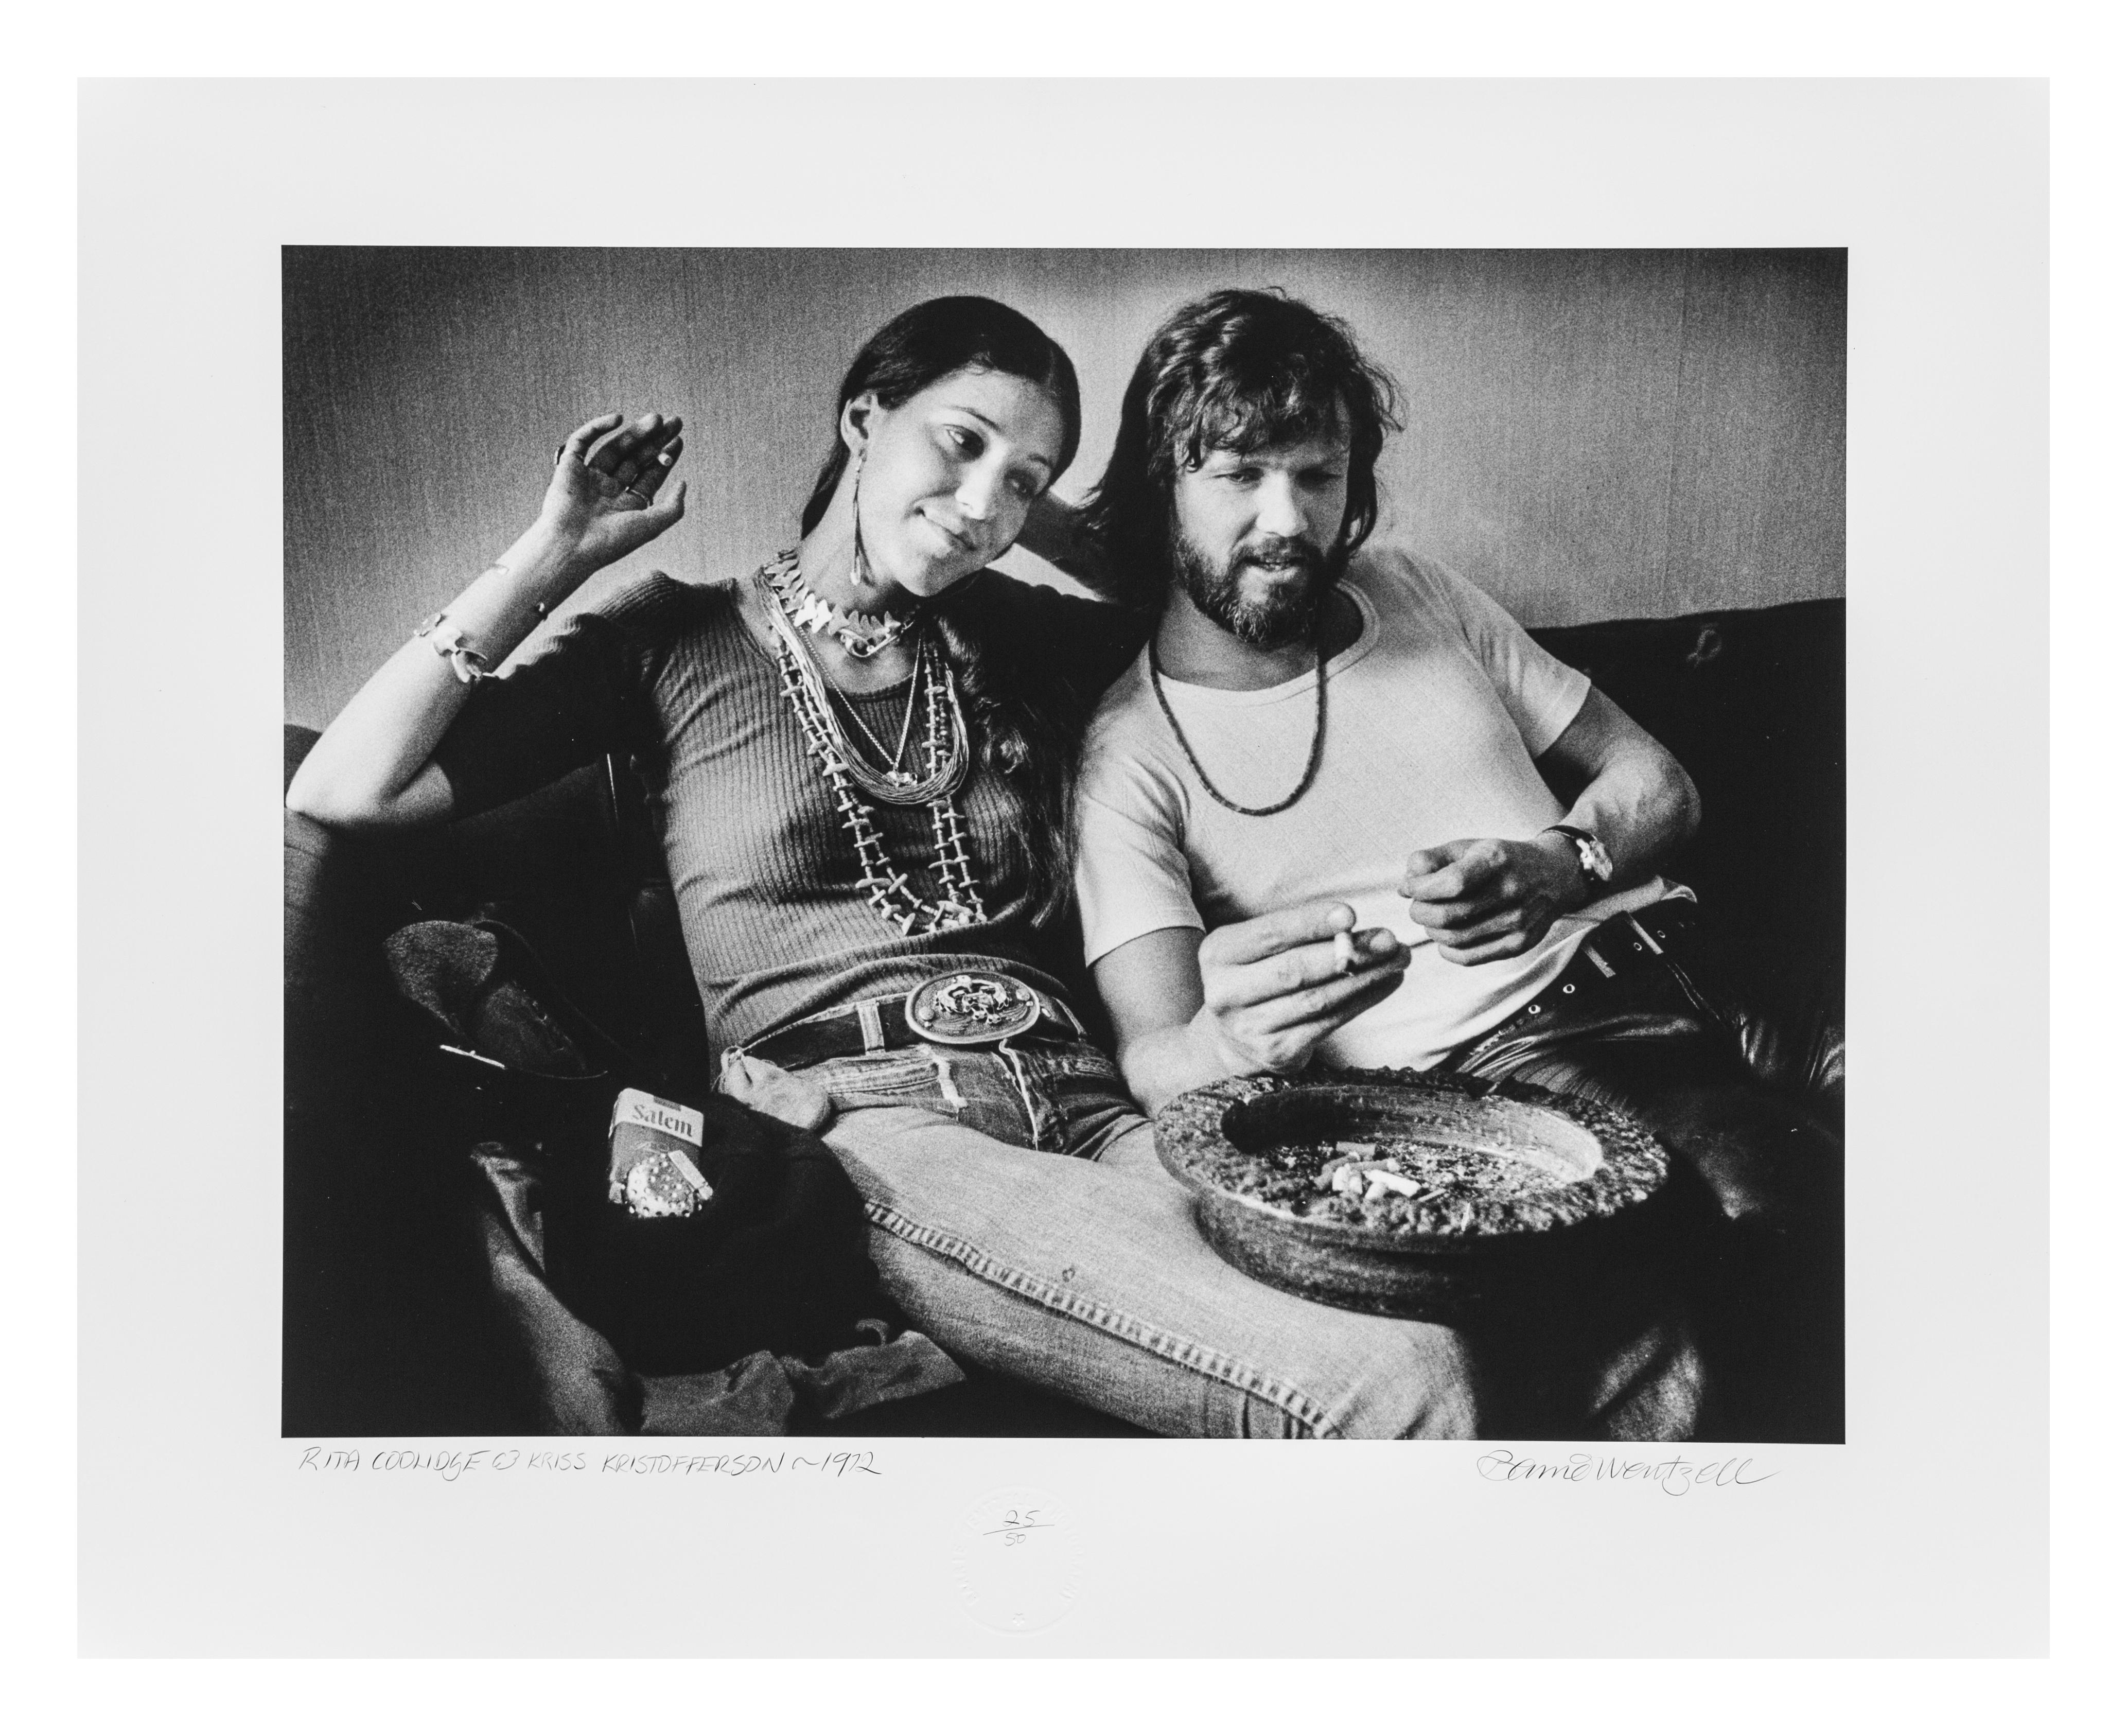 Barrie Wentzell Black and White Photograph - Rita Coolidge & Kris Kristofferson